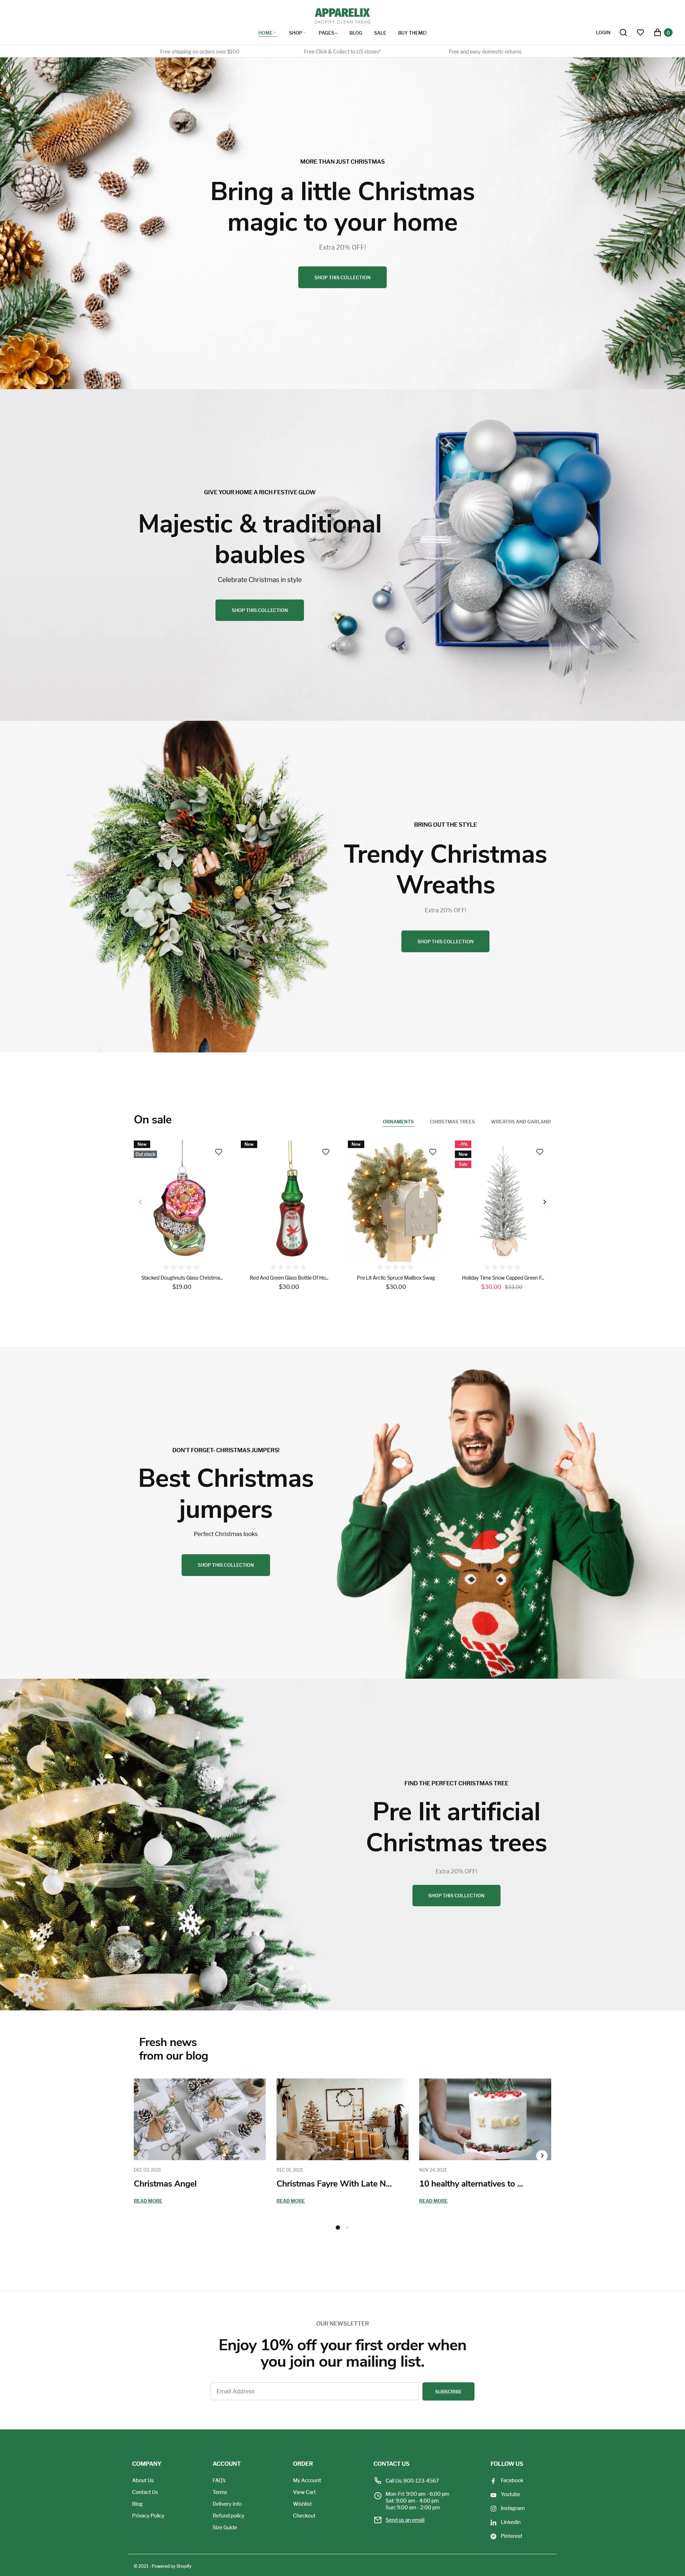 Apparelix Christmas Tree Shop